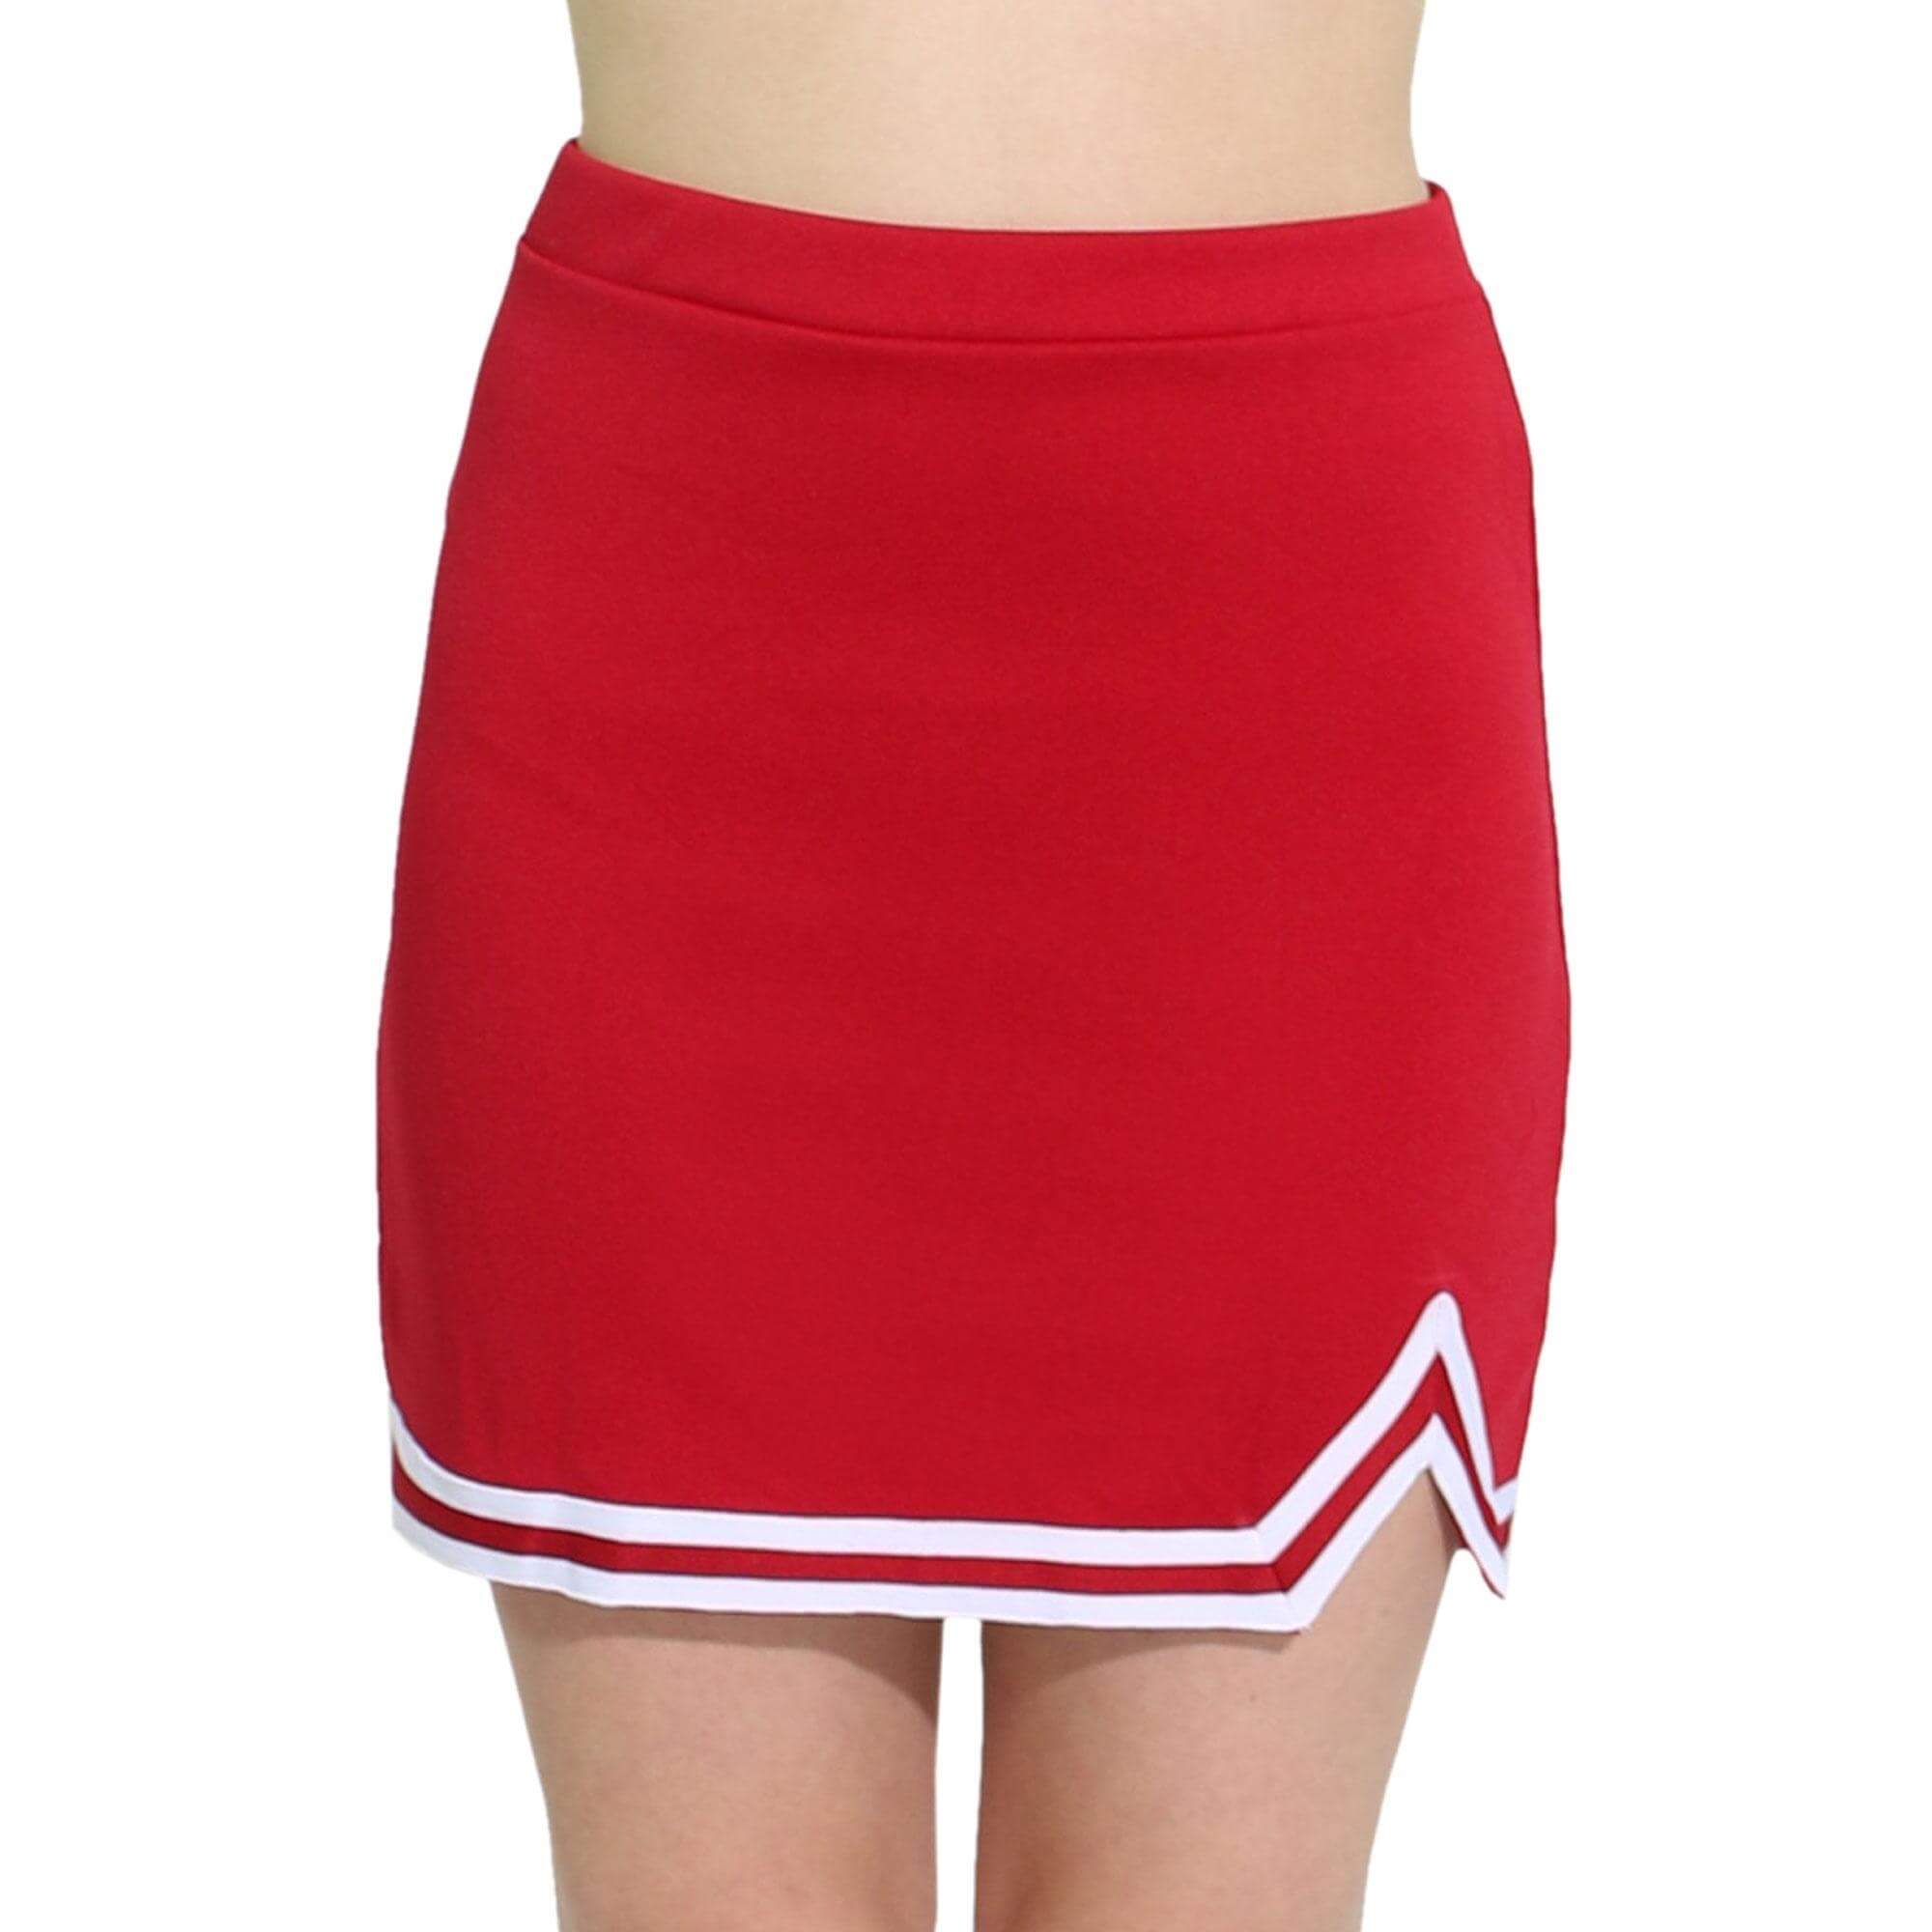 Danzcue Womens A-Line Cheerleaders Uniform Skirt